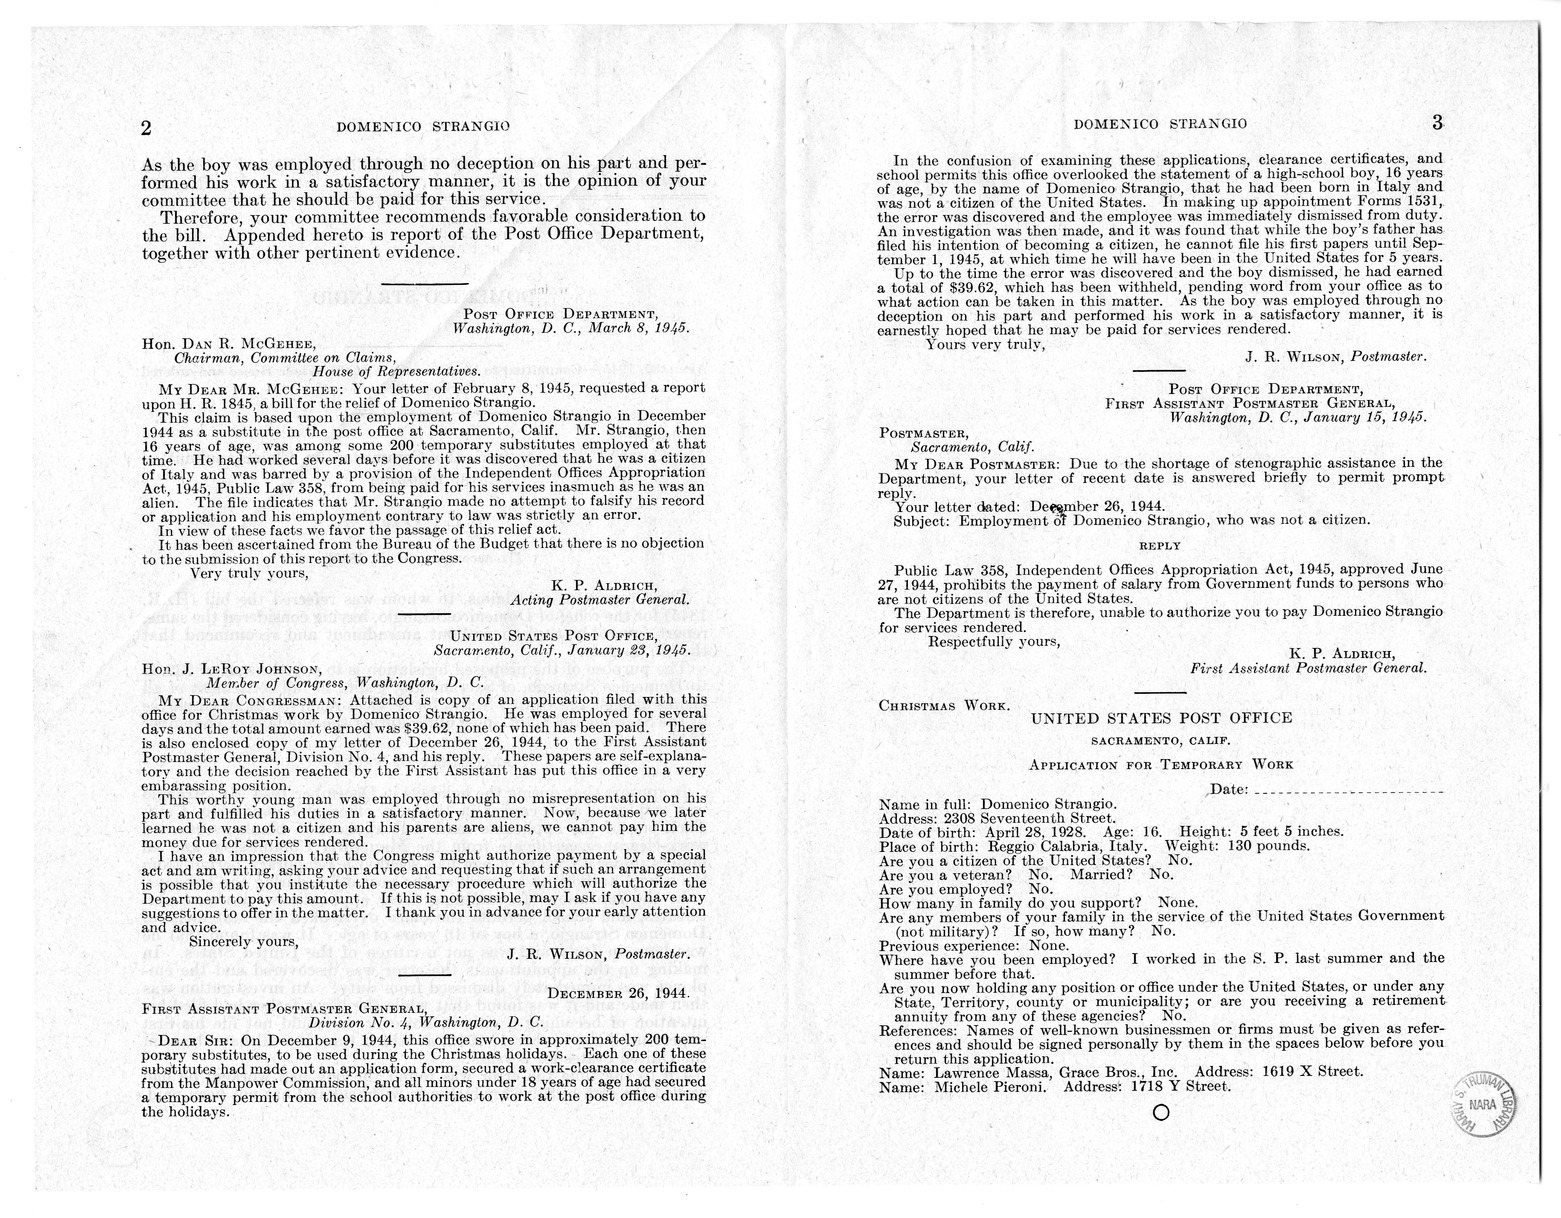 Memorandum from Frederick J. Bailey to M. C. Latta, H. R. 1845, for the Relief of Domenico Strangio, with Attachments